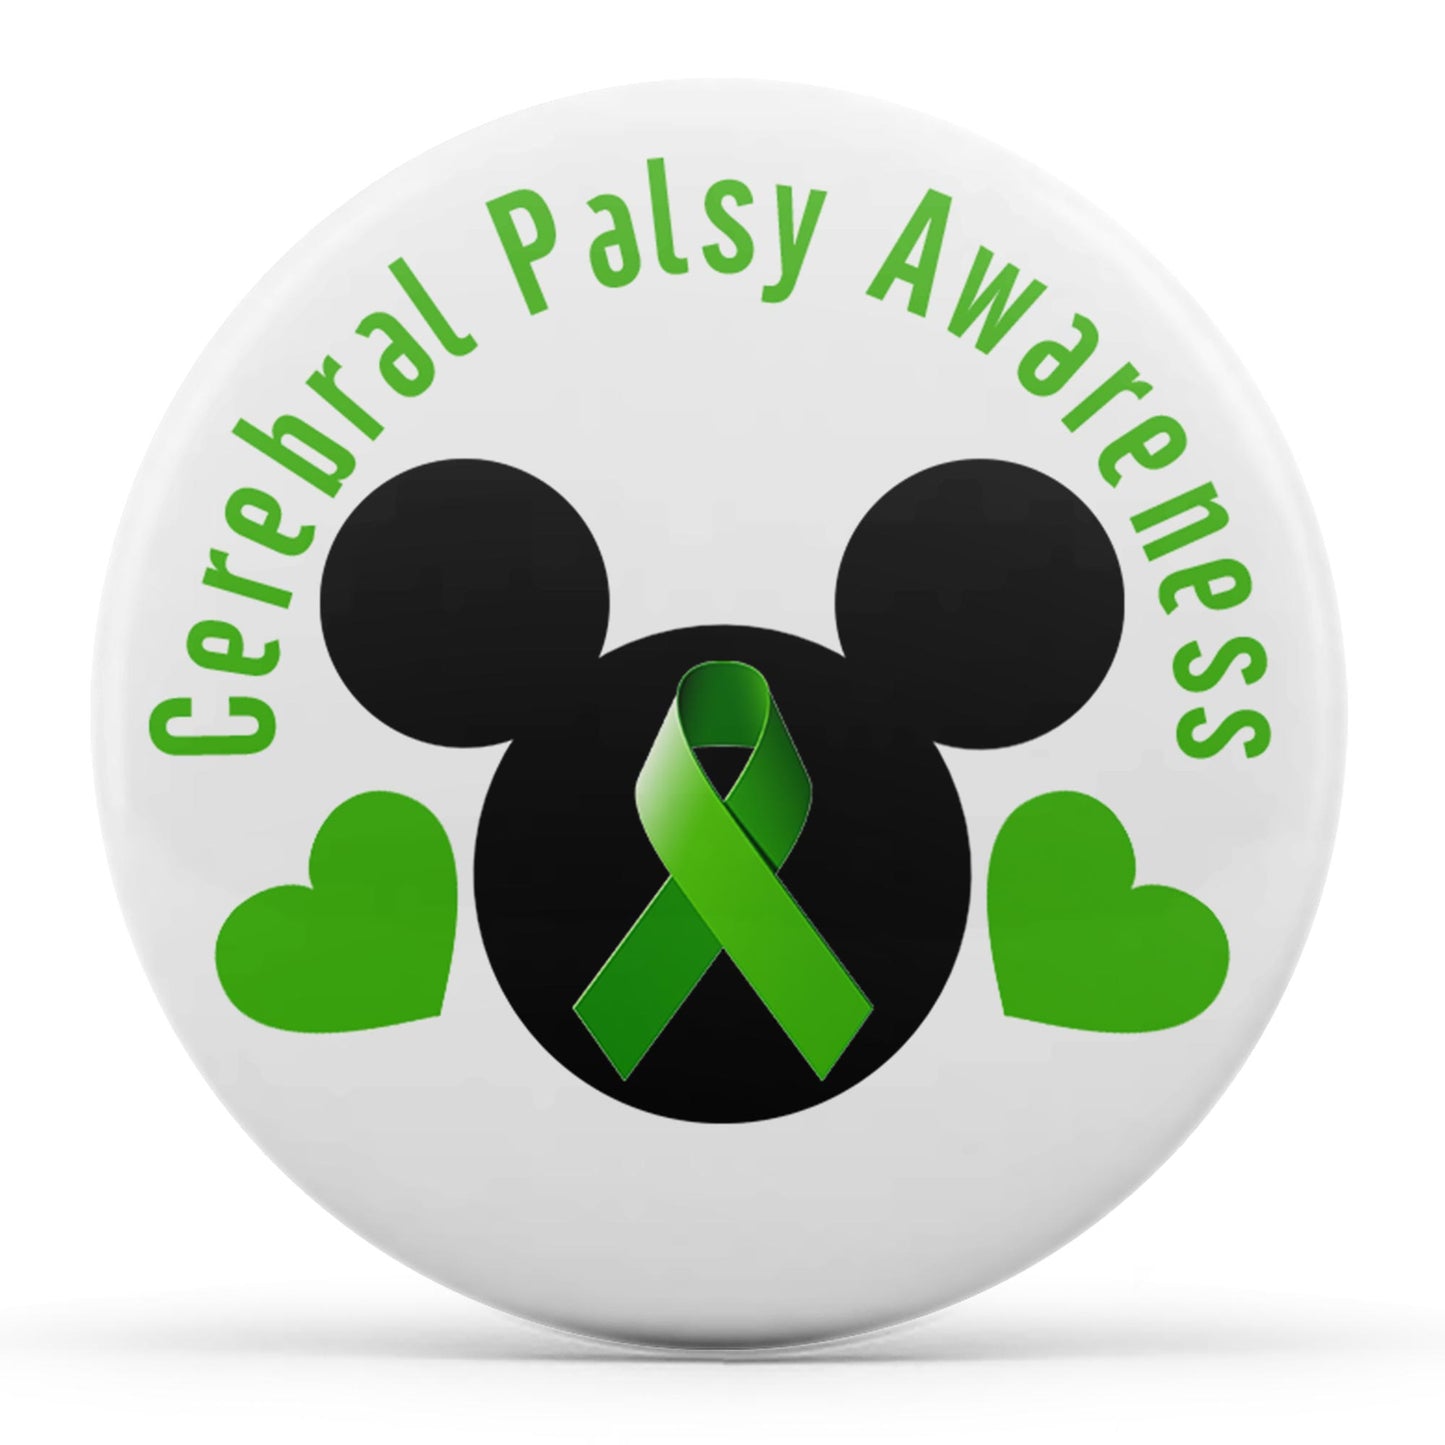 Cerebral Palsy Awareness